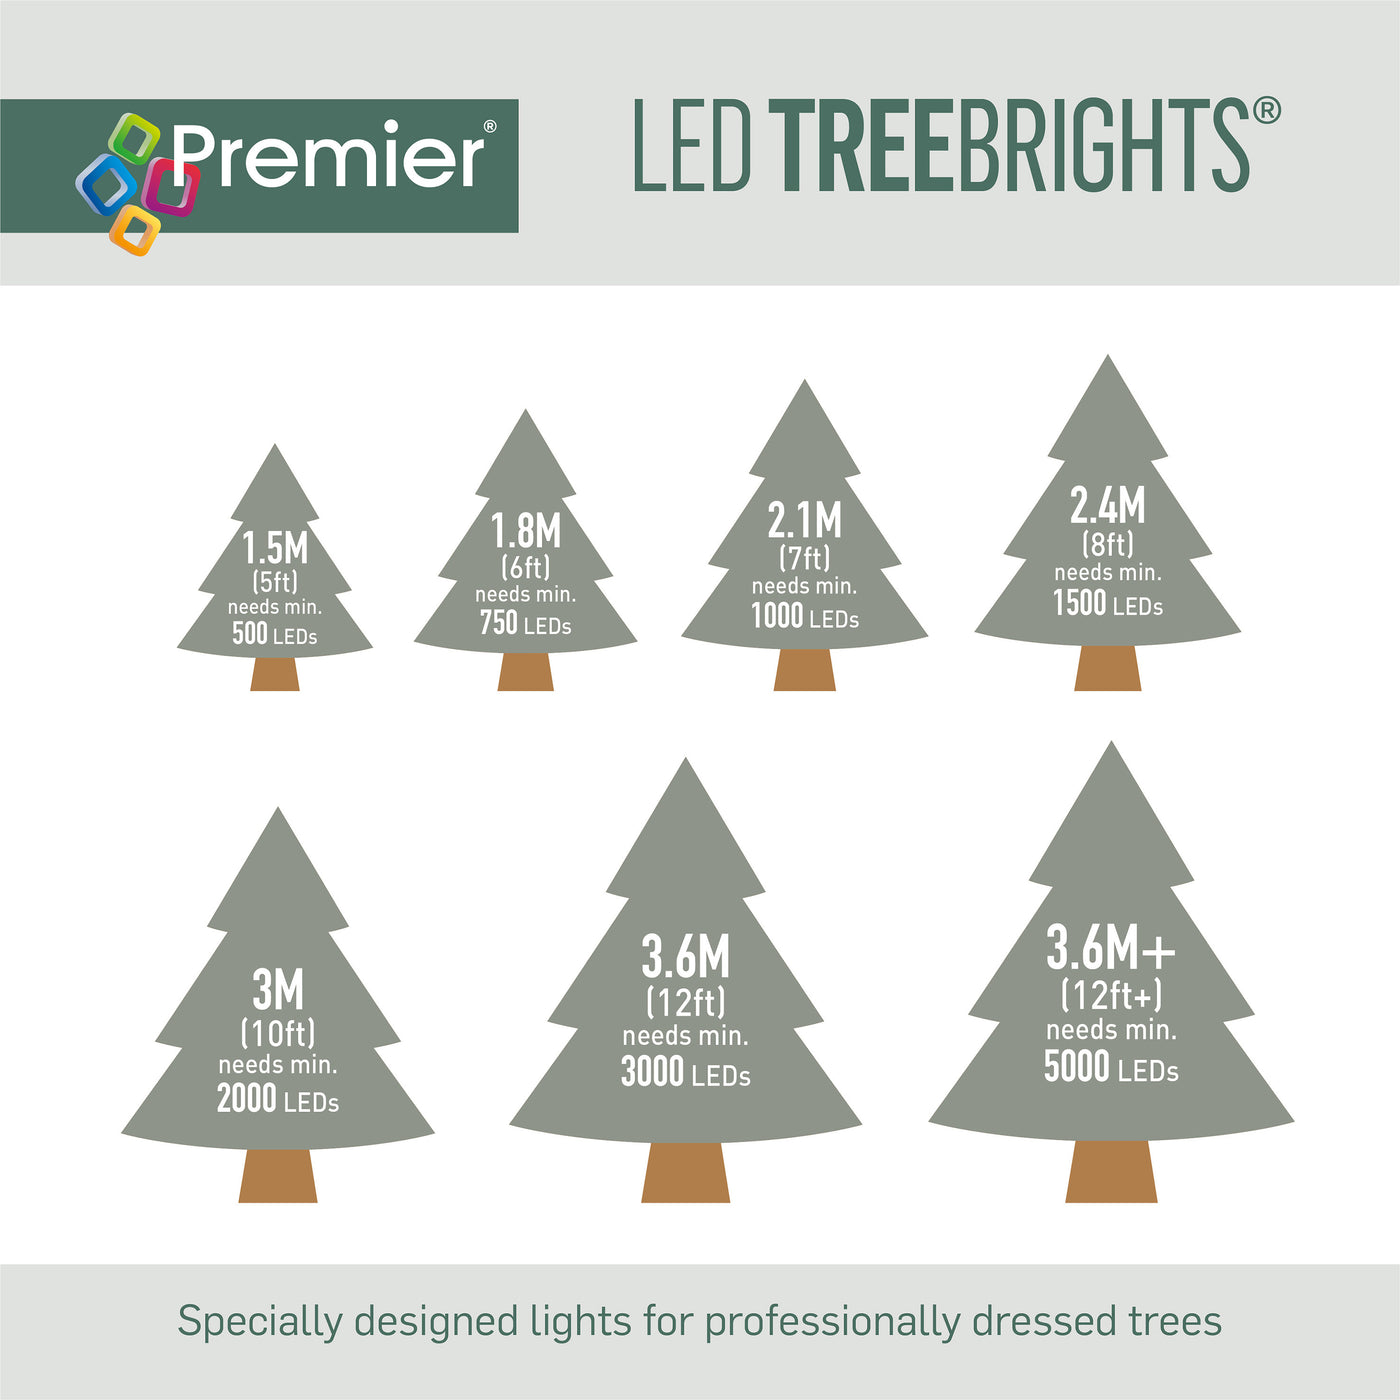 500 Multi Action LED TreeBrights Christmas Tree Lights - Warm White